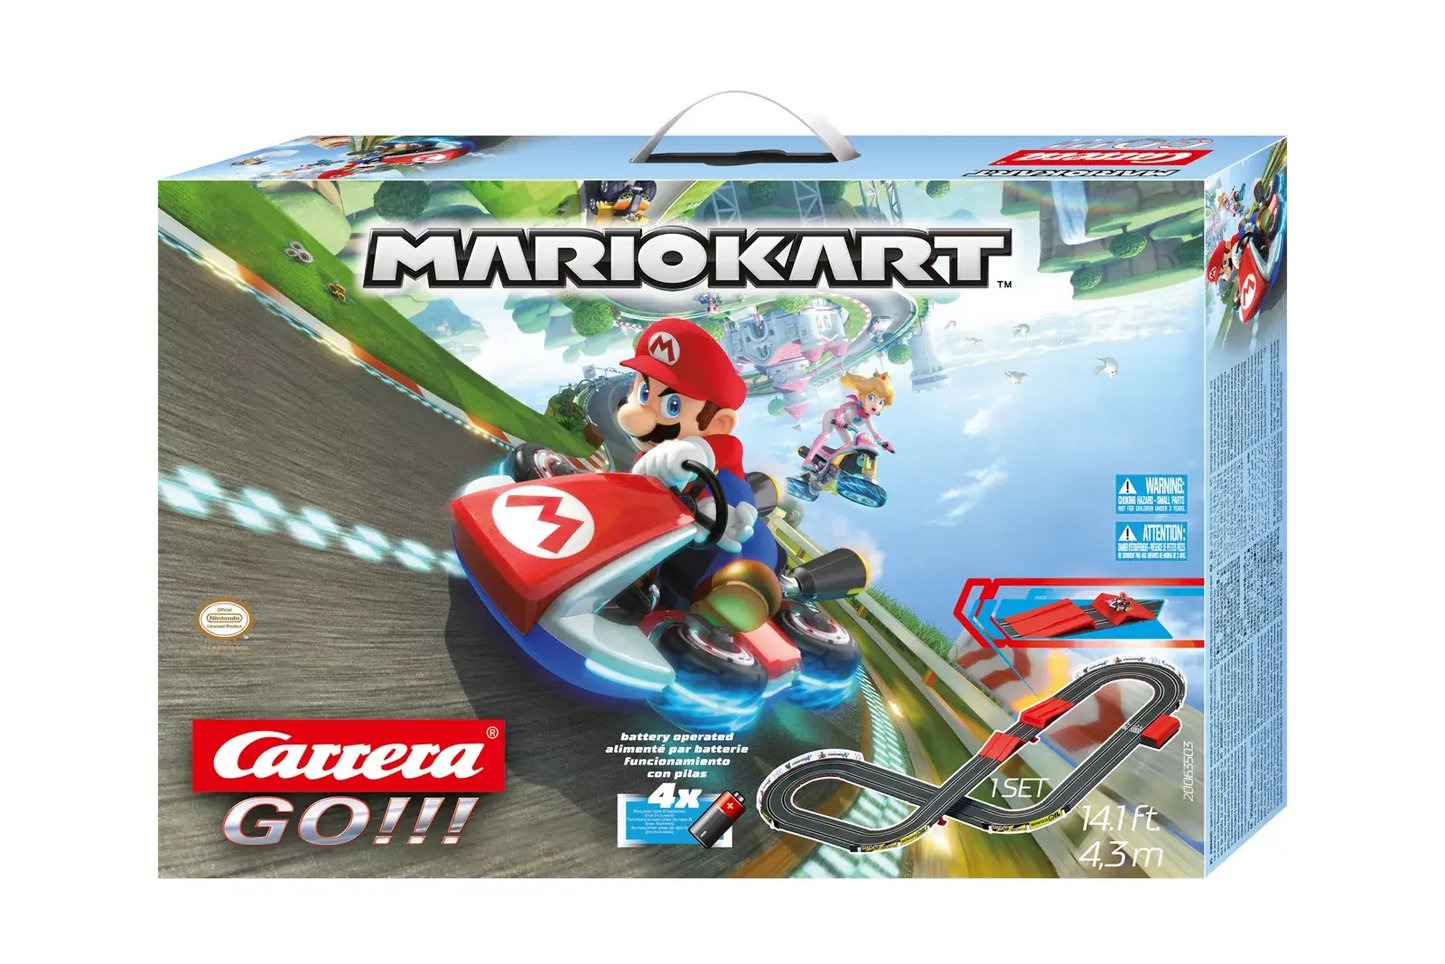 Mario Kart (14.1 FT / 1:43 Scale)